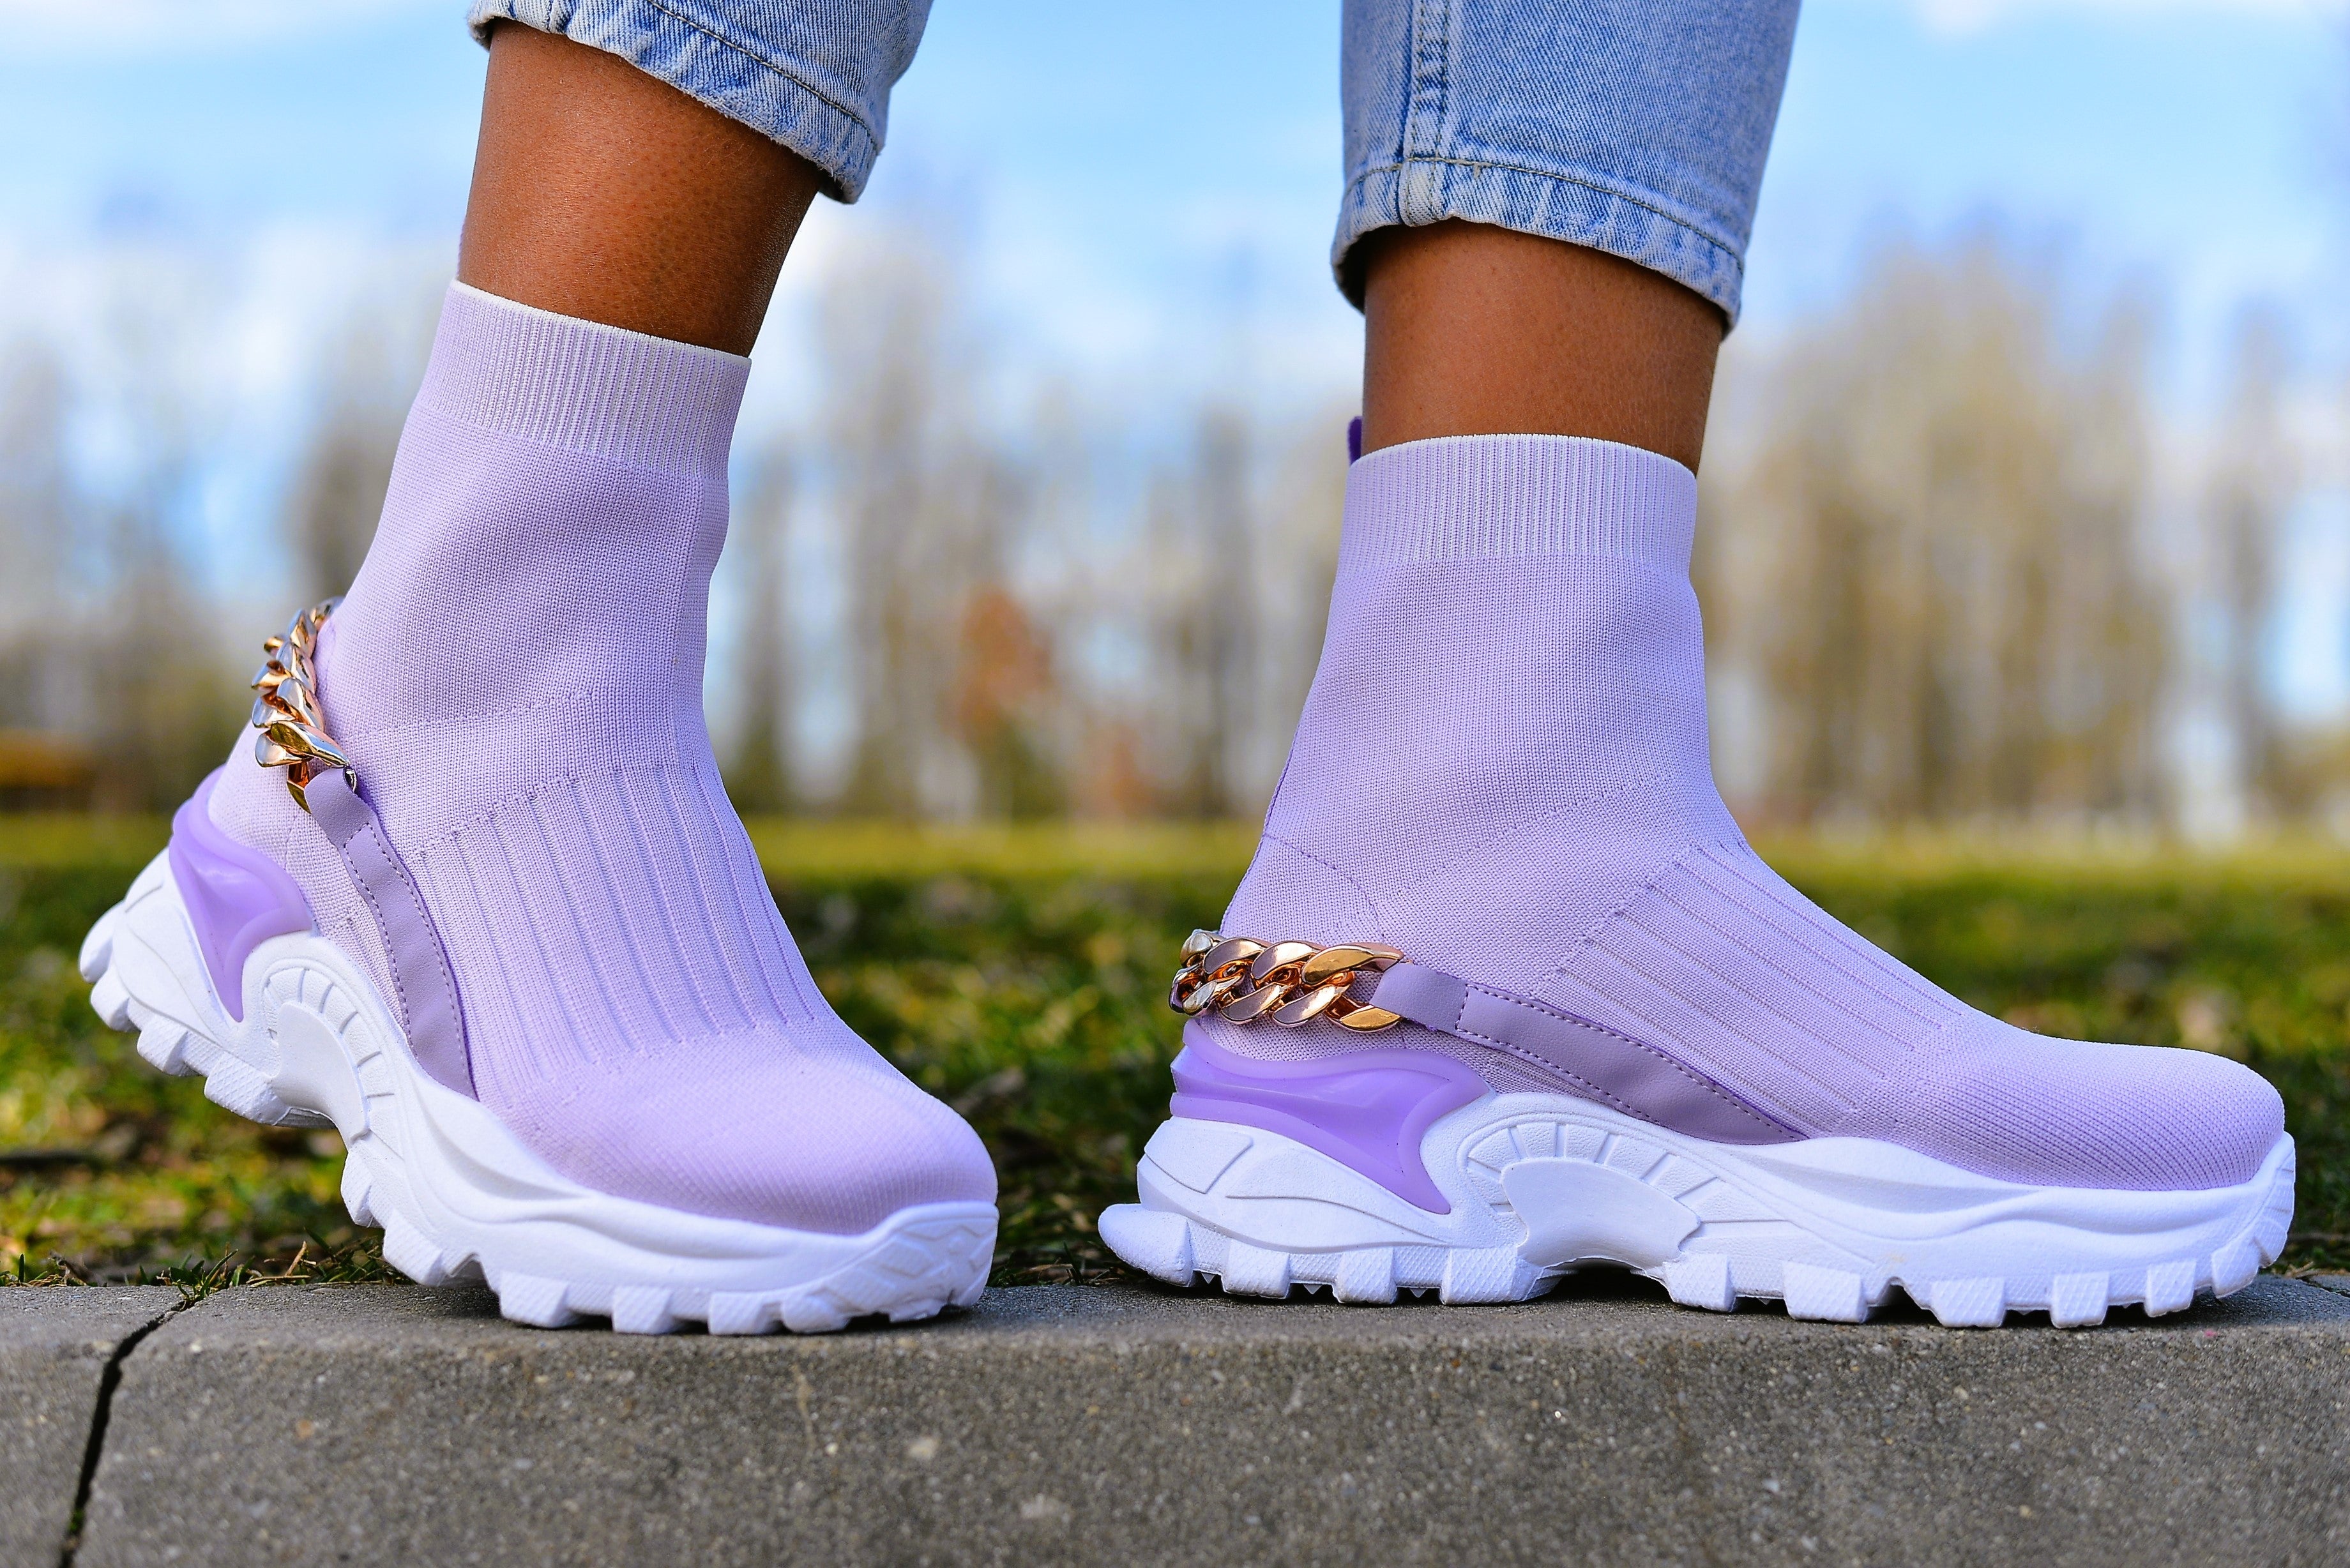 Women's High Top Purple Megan Sneakers Made Of Textile Material